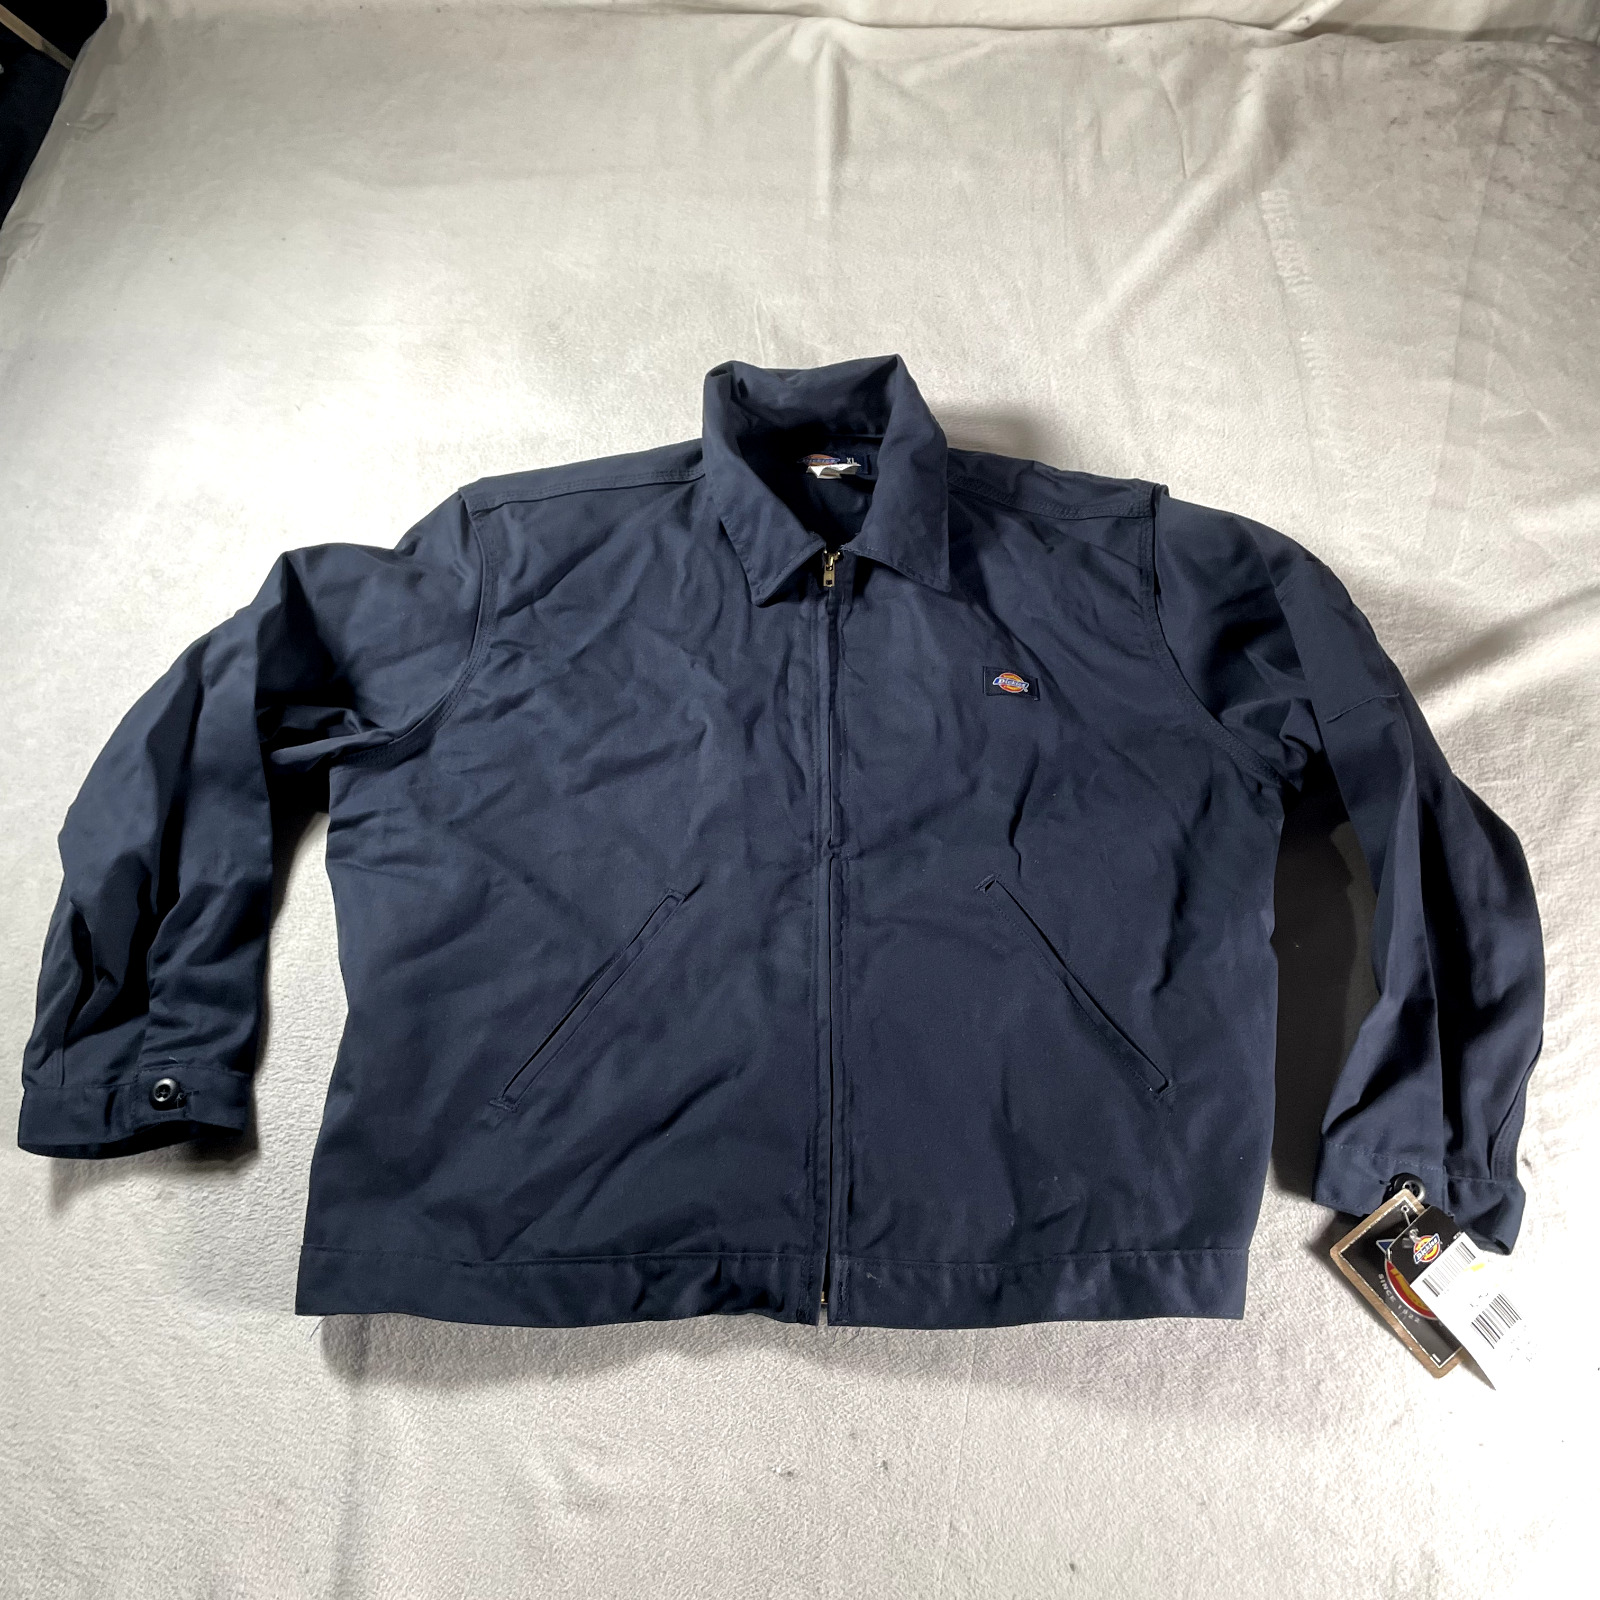 Vintage Dickies Jacket Extra Large Blue Canvas Workwear Eisenhower Bomber 90s